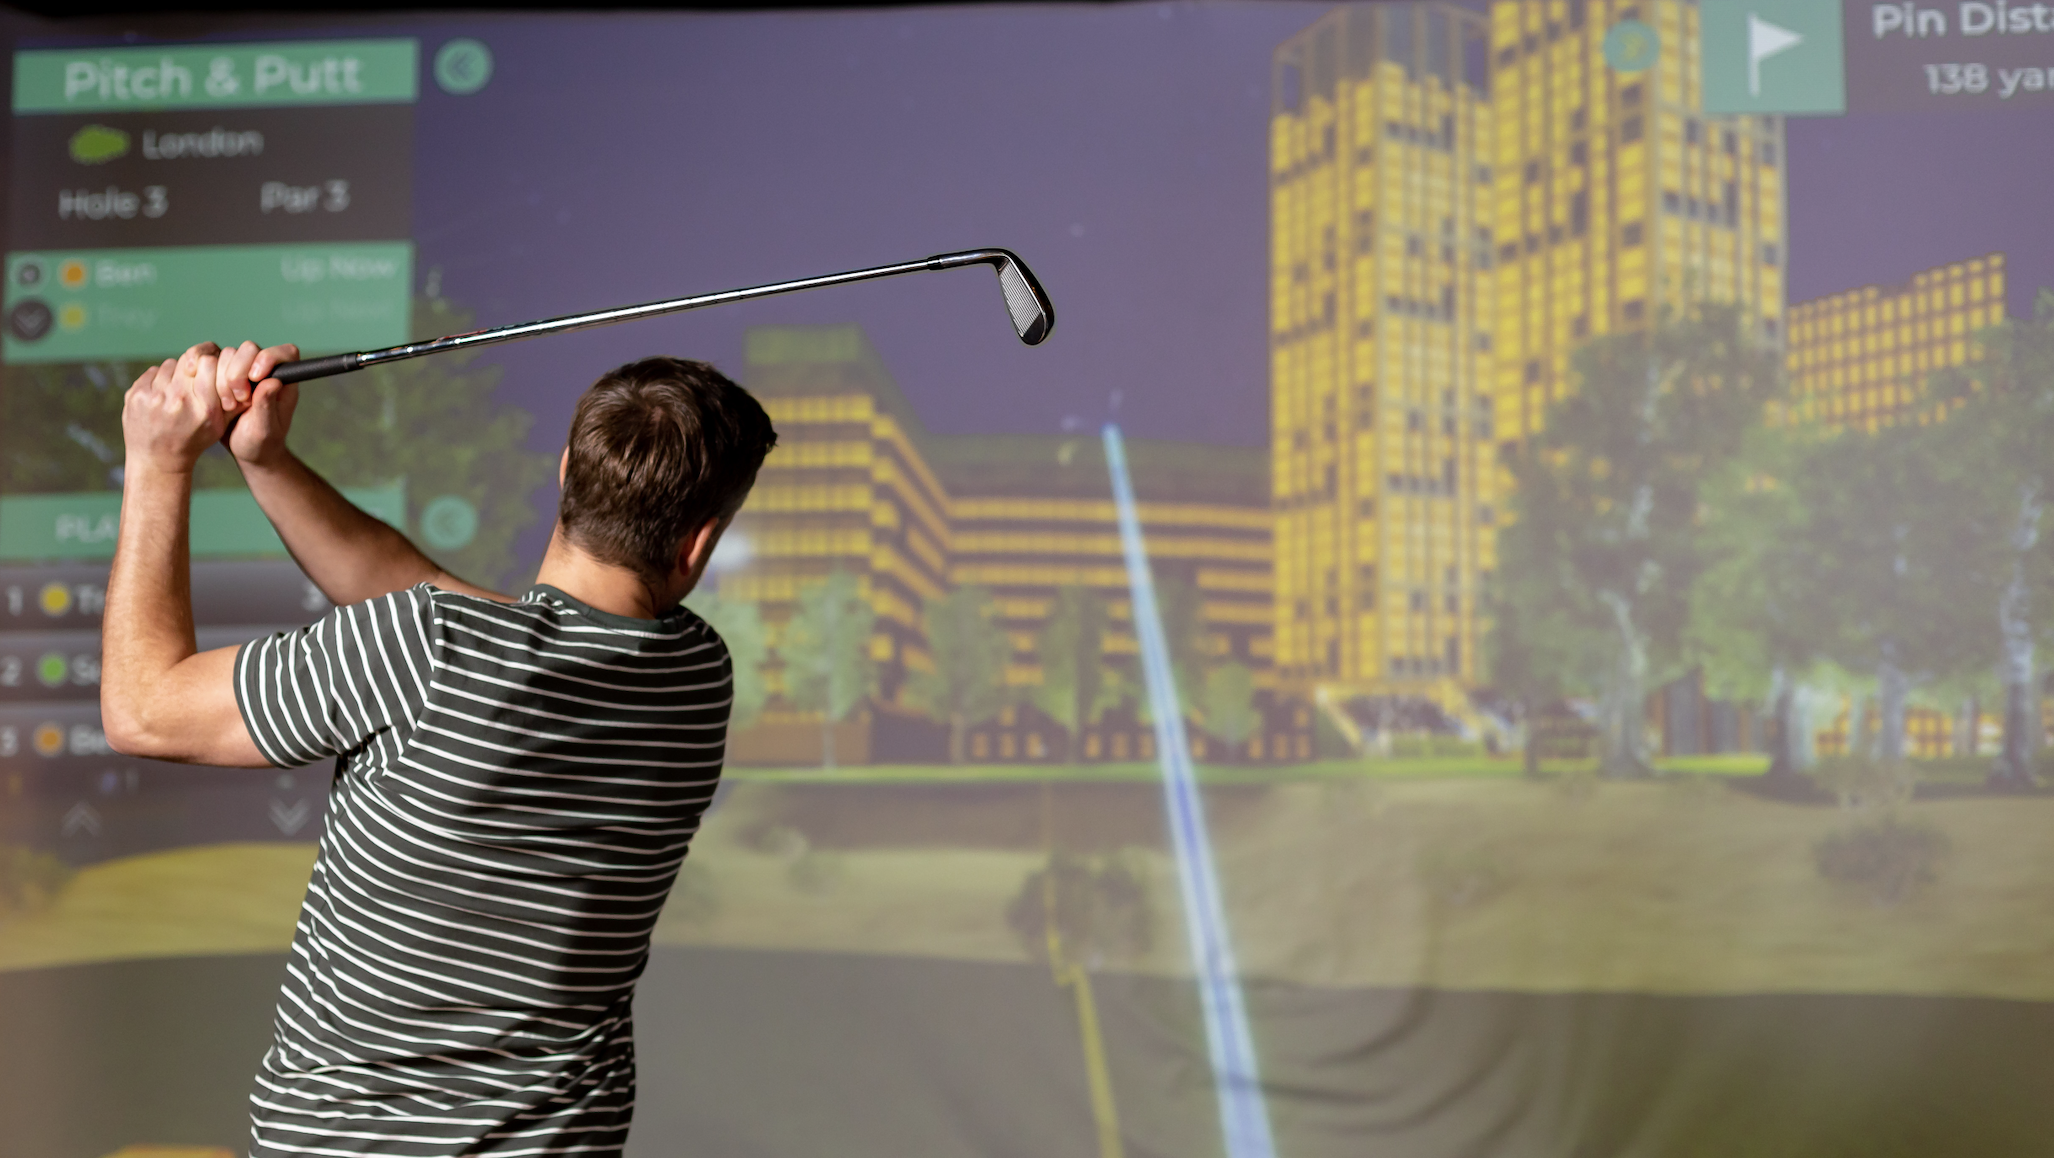 Pitch n Putt Social Fun Golf Game in London